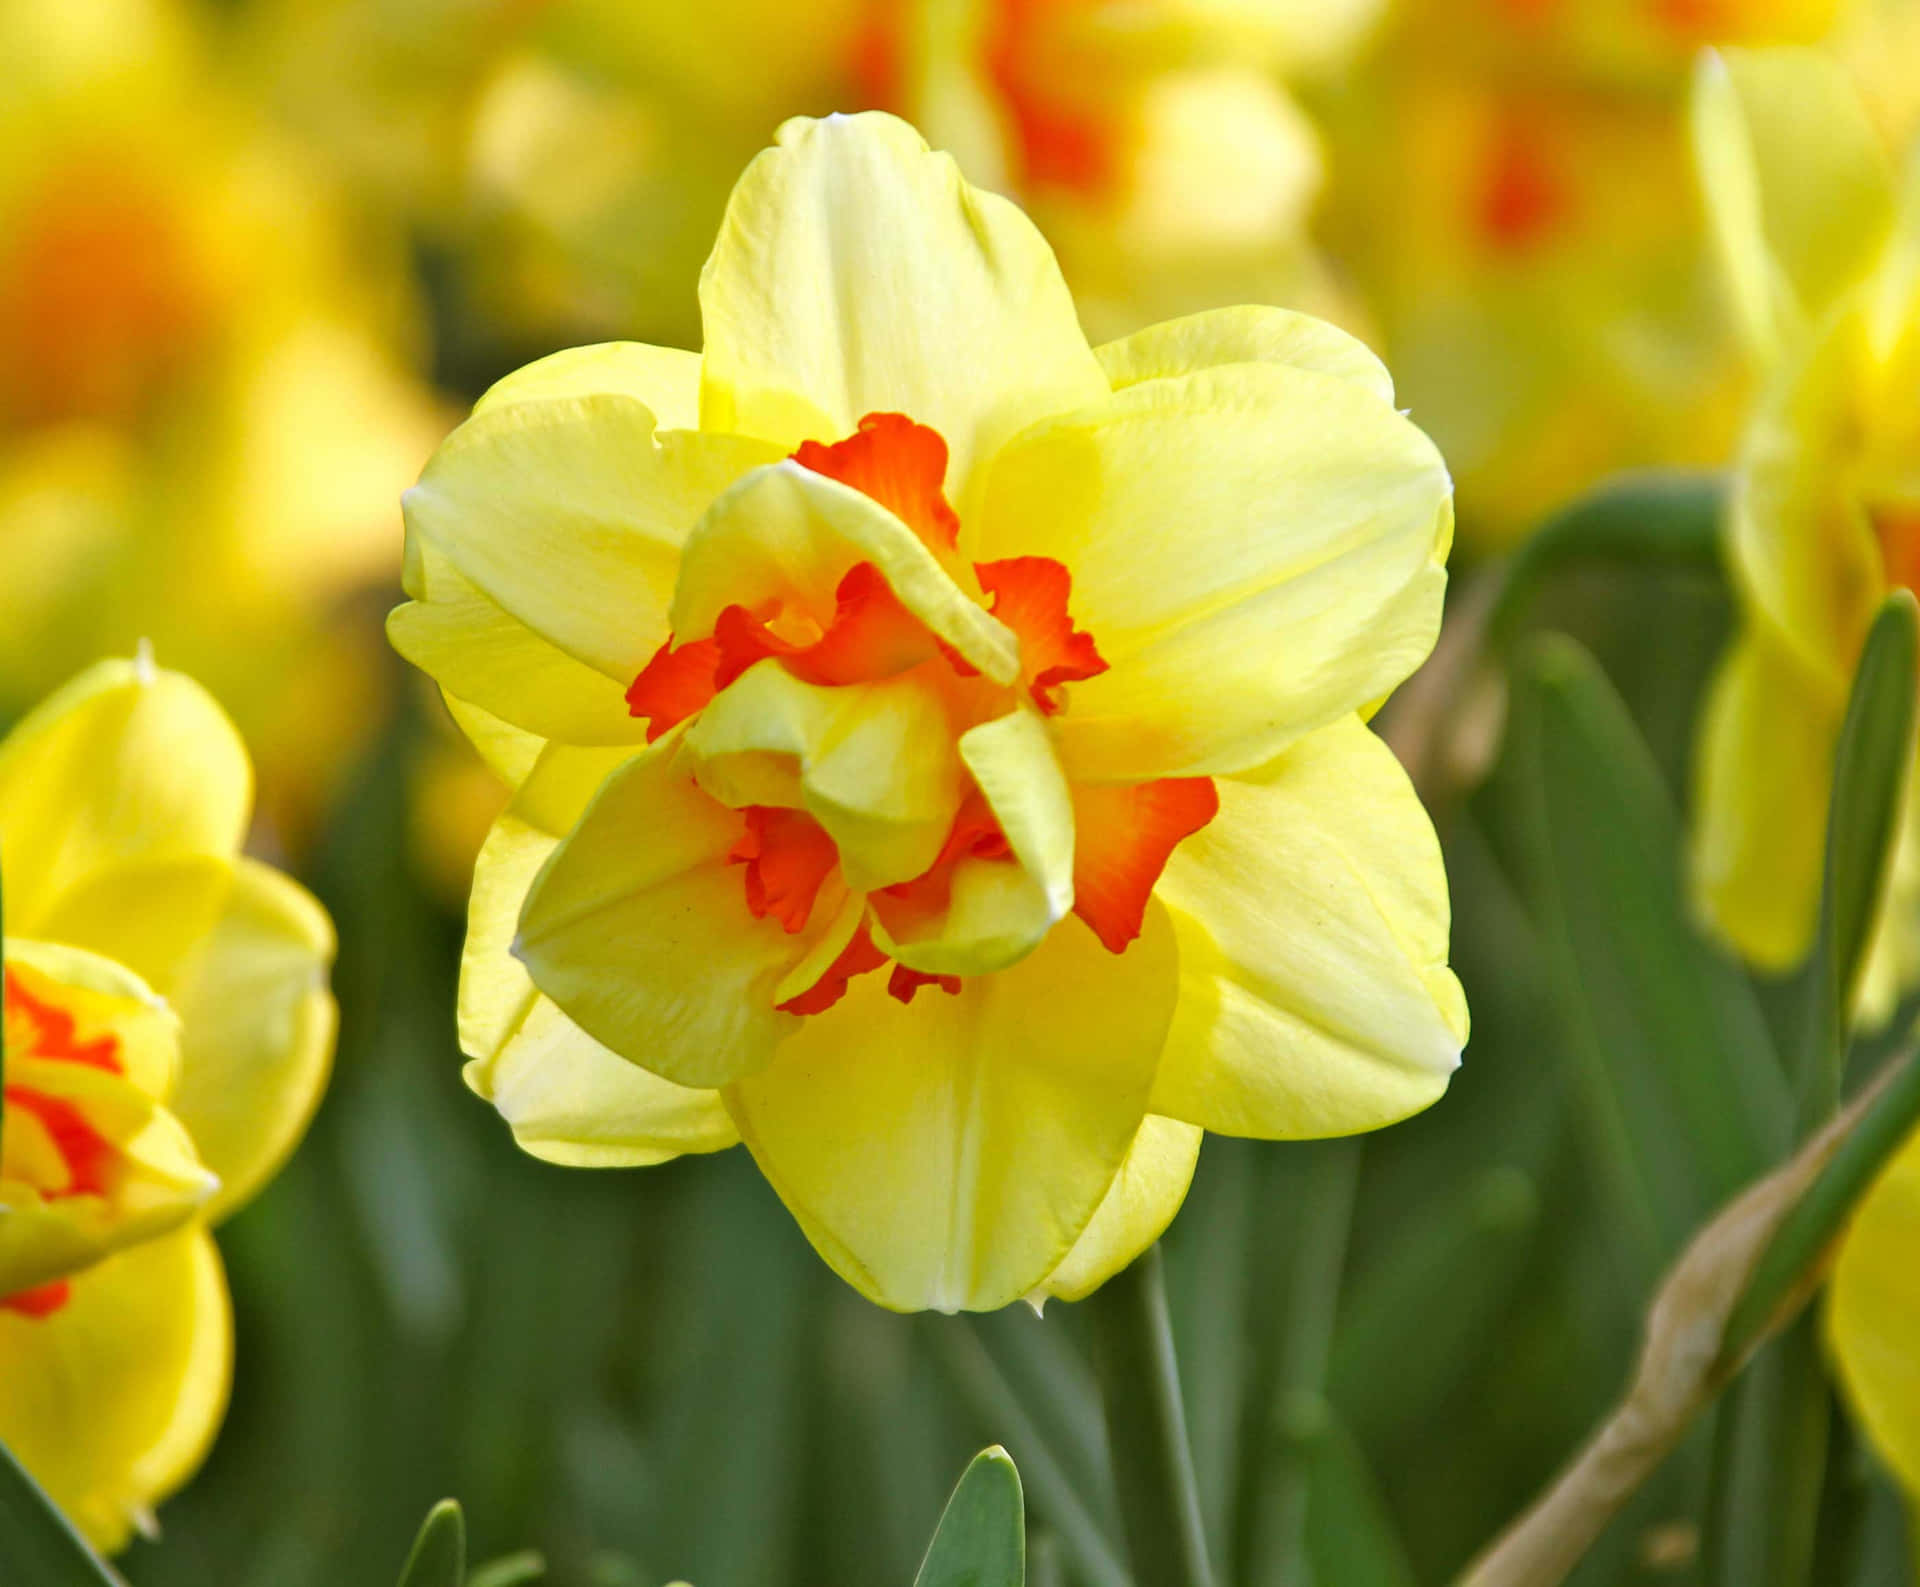 Brilliant Display Of Vibrant Daffodils In Full Bloom